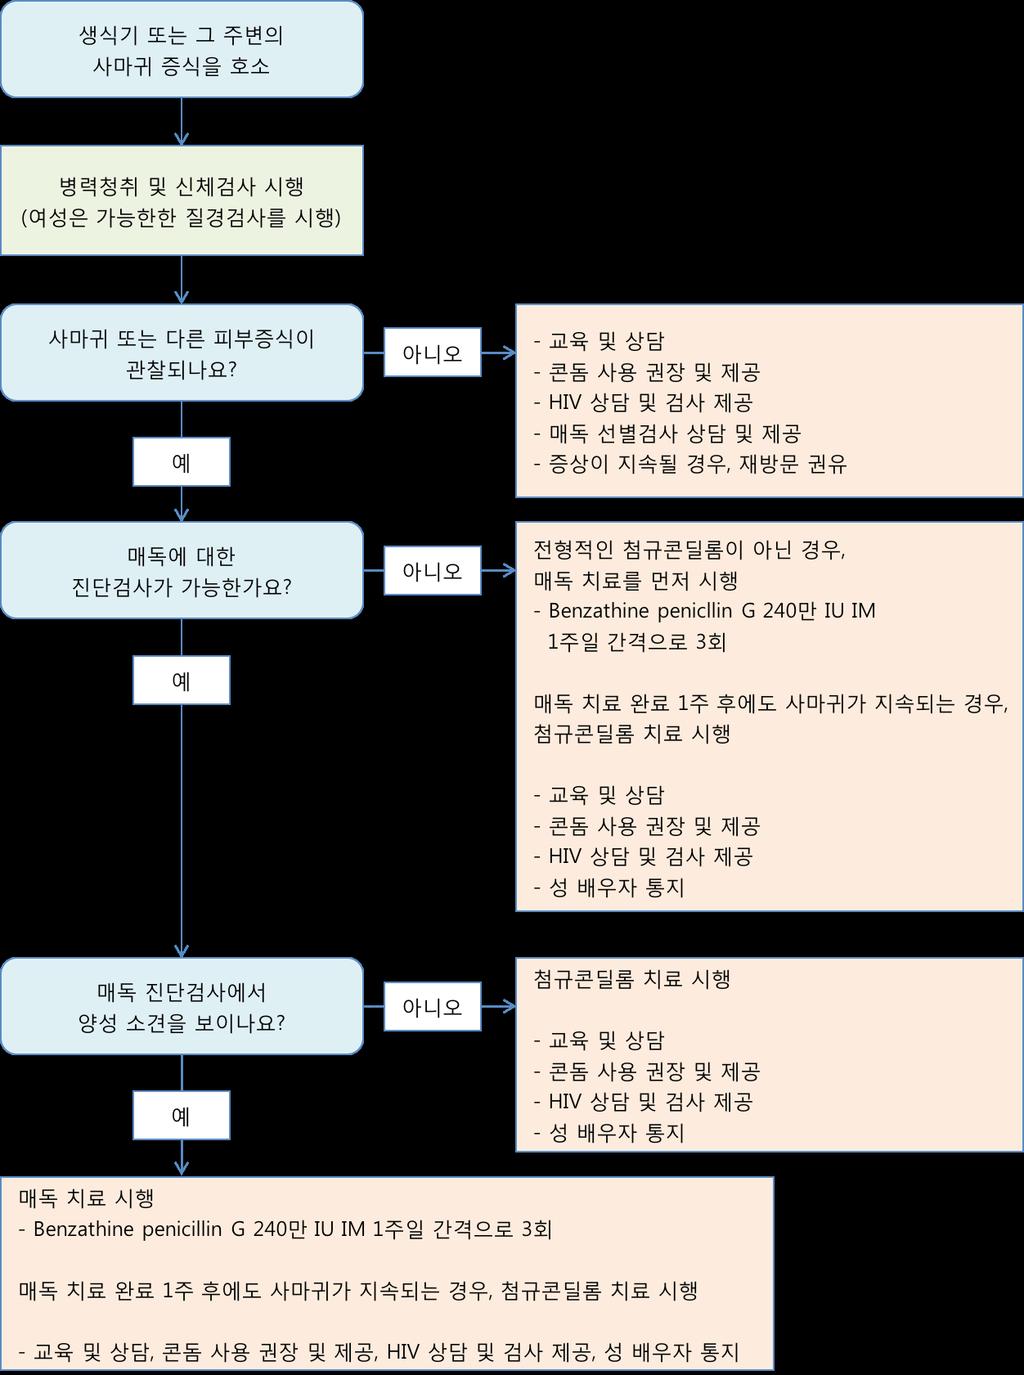 KOREAN STI GUIDELINES 2016